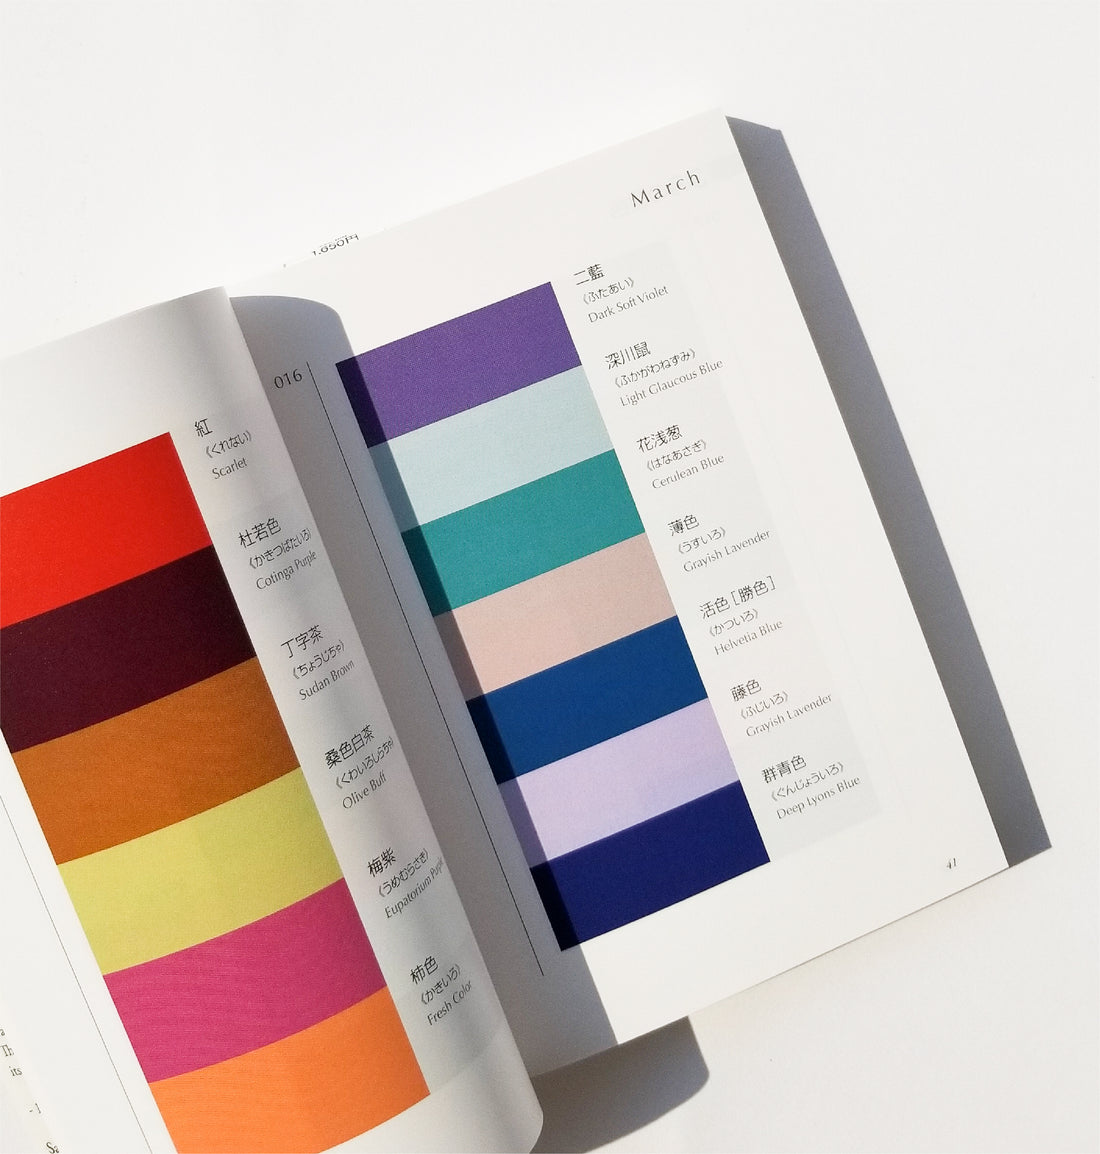 A Dictionary of Colour Combinations Vol. 2